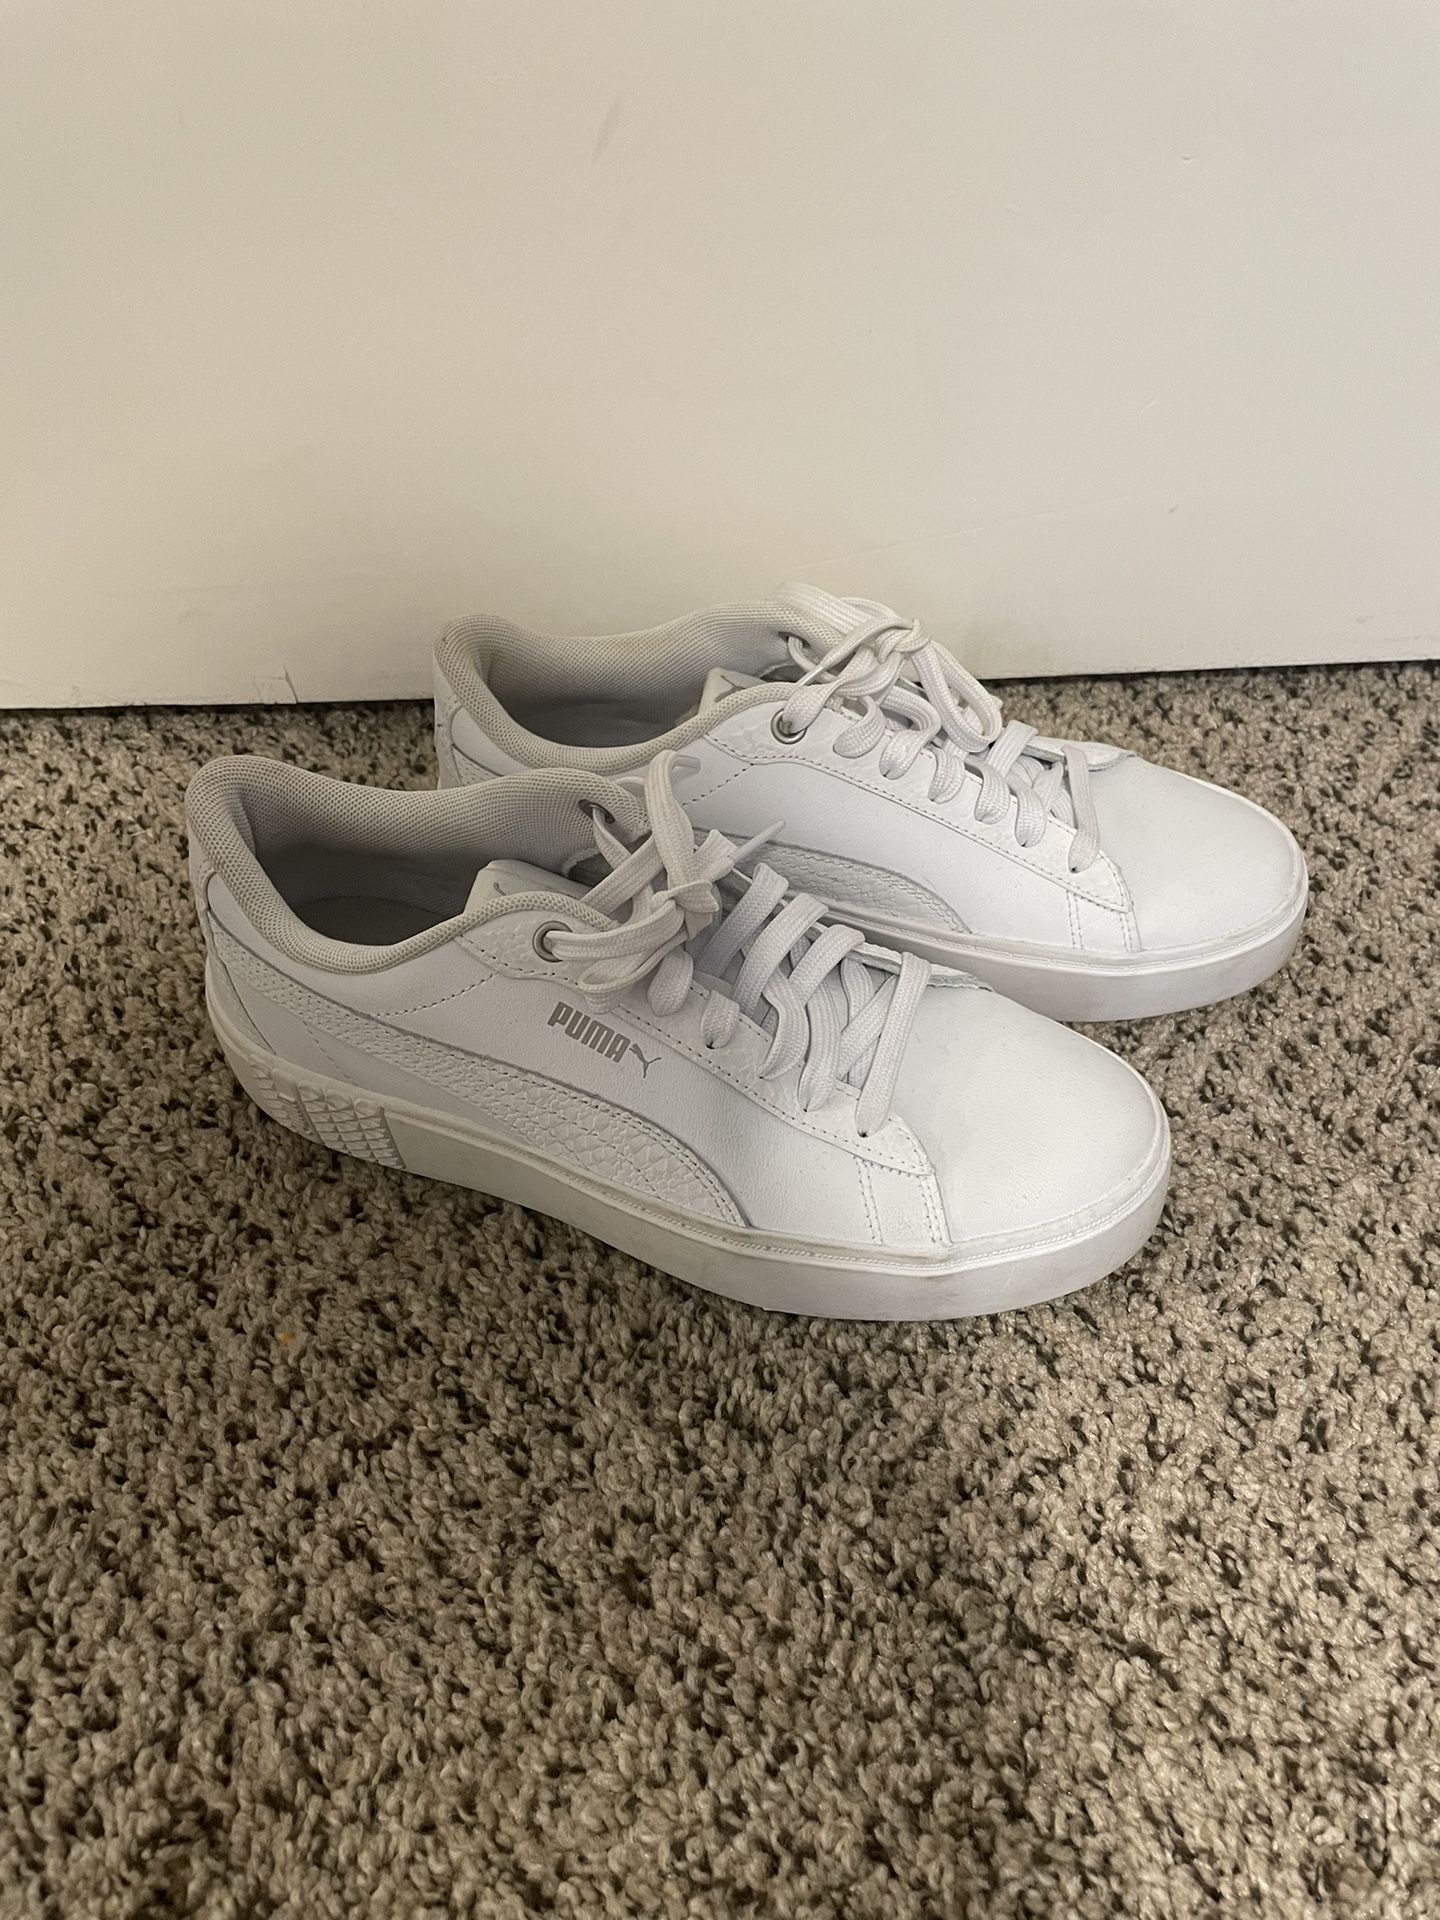 White Puma Shoes